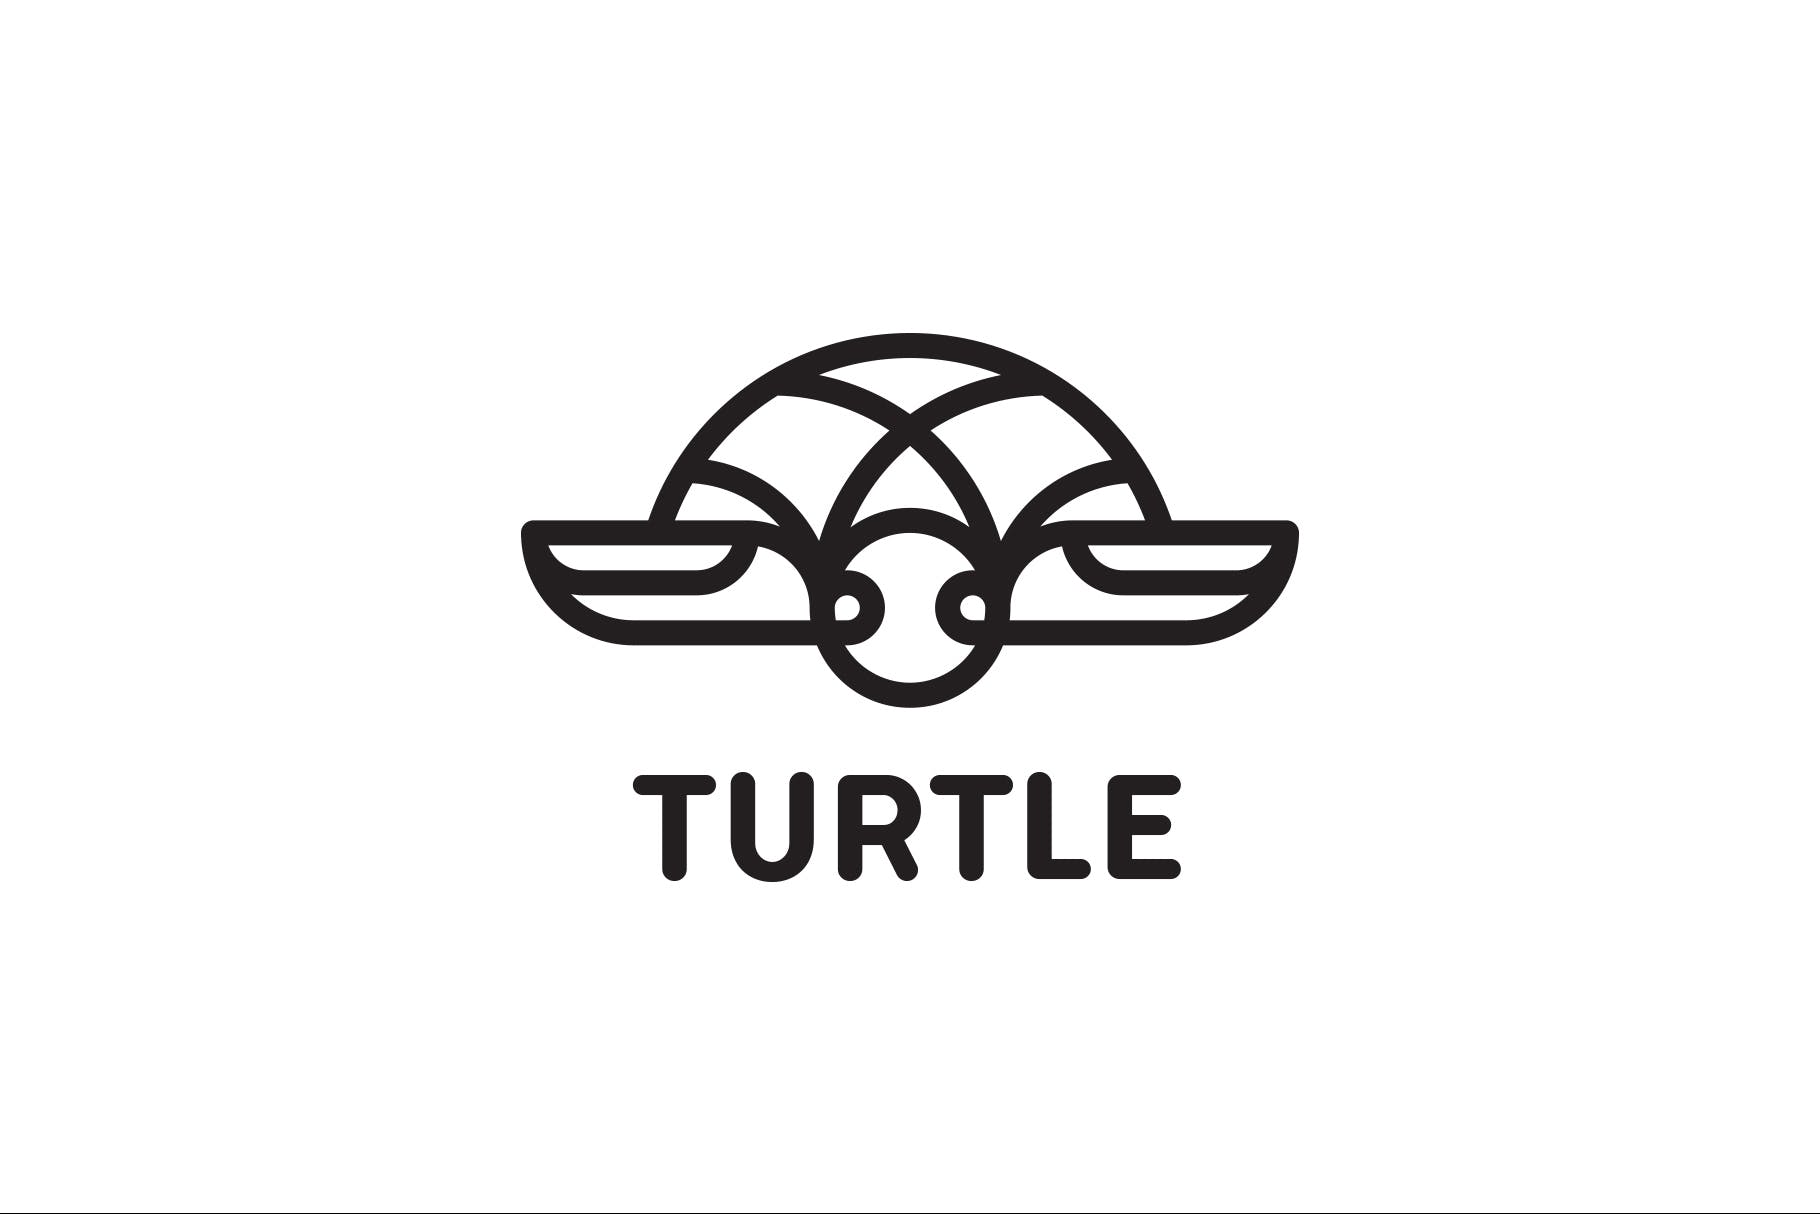 海龟乌龟图形品牌Logo设计模板 Turtle插图(1)